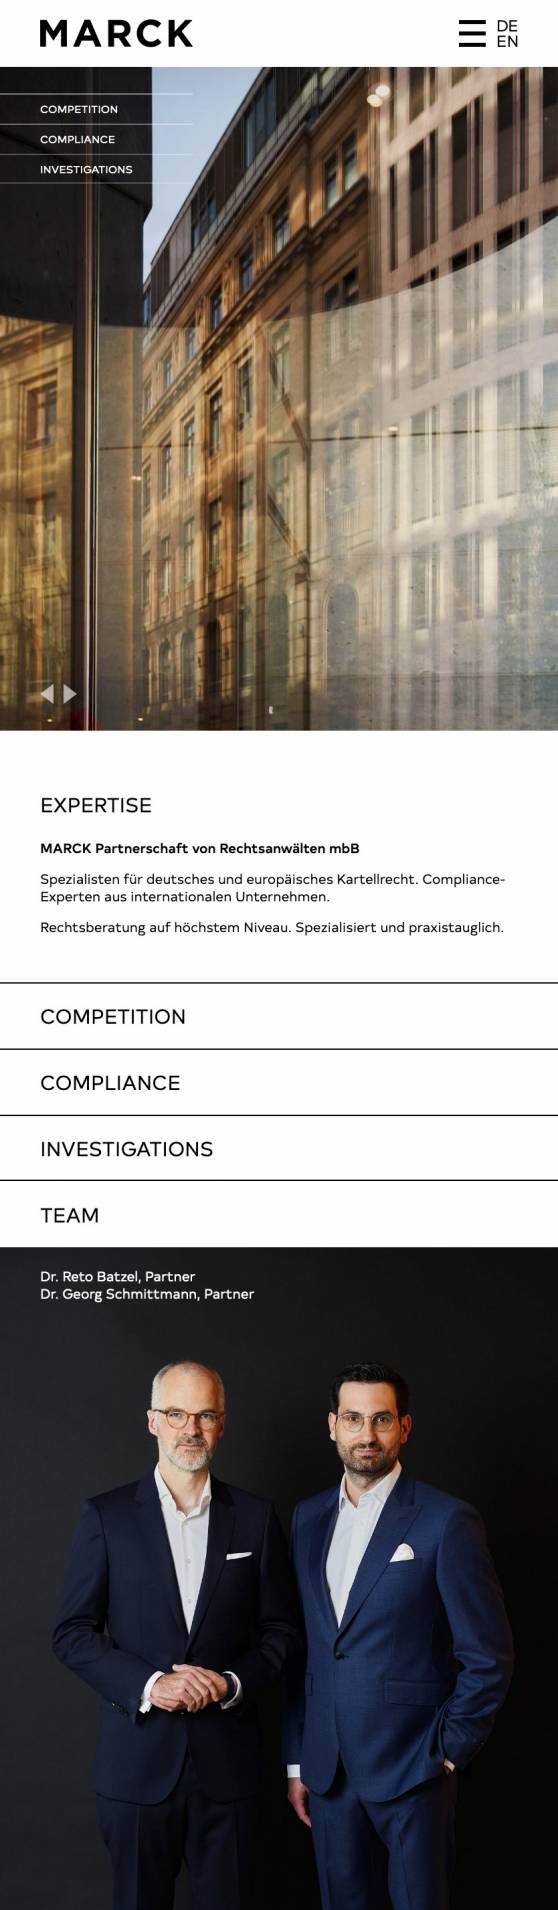 Marck / Corporate Design and Website